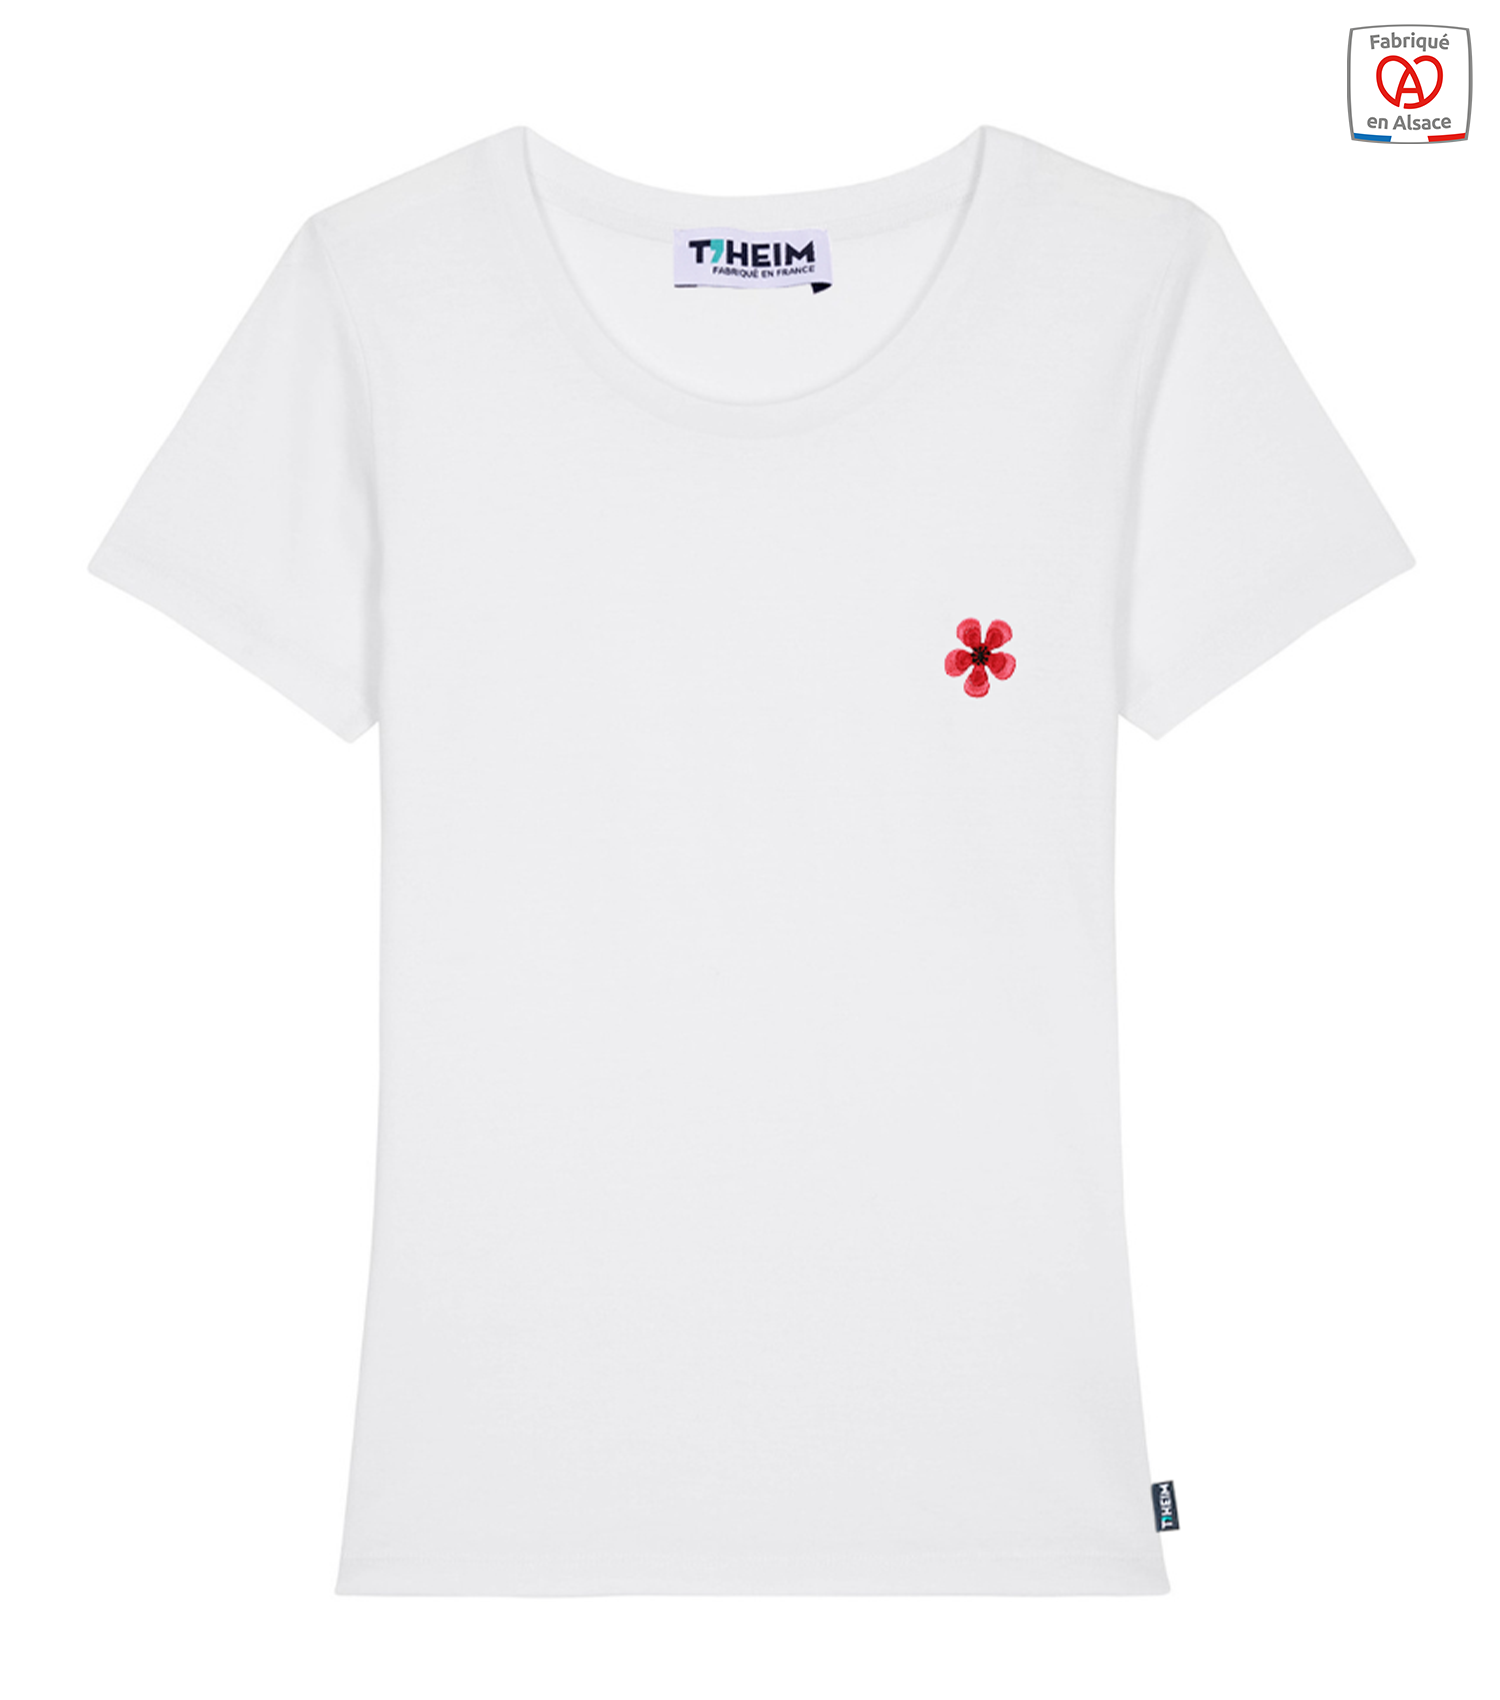 theim-t-shirt-femme-blanc-fleur-geranium-made-in-france-1500x1700px